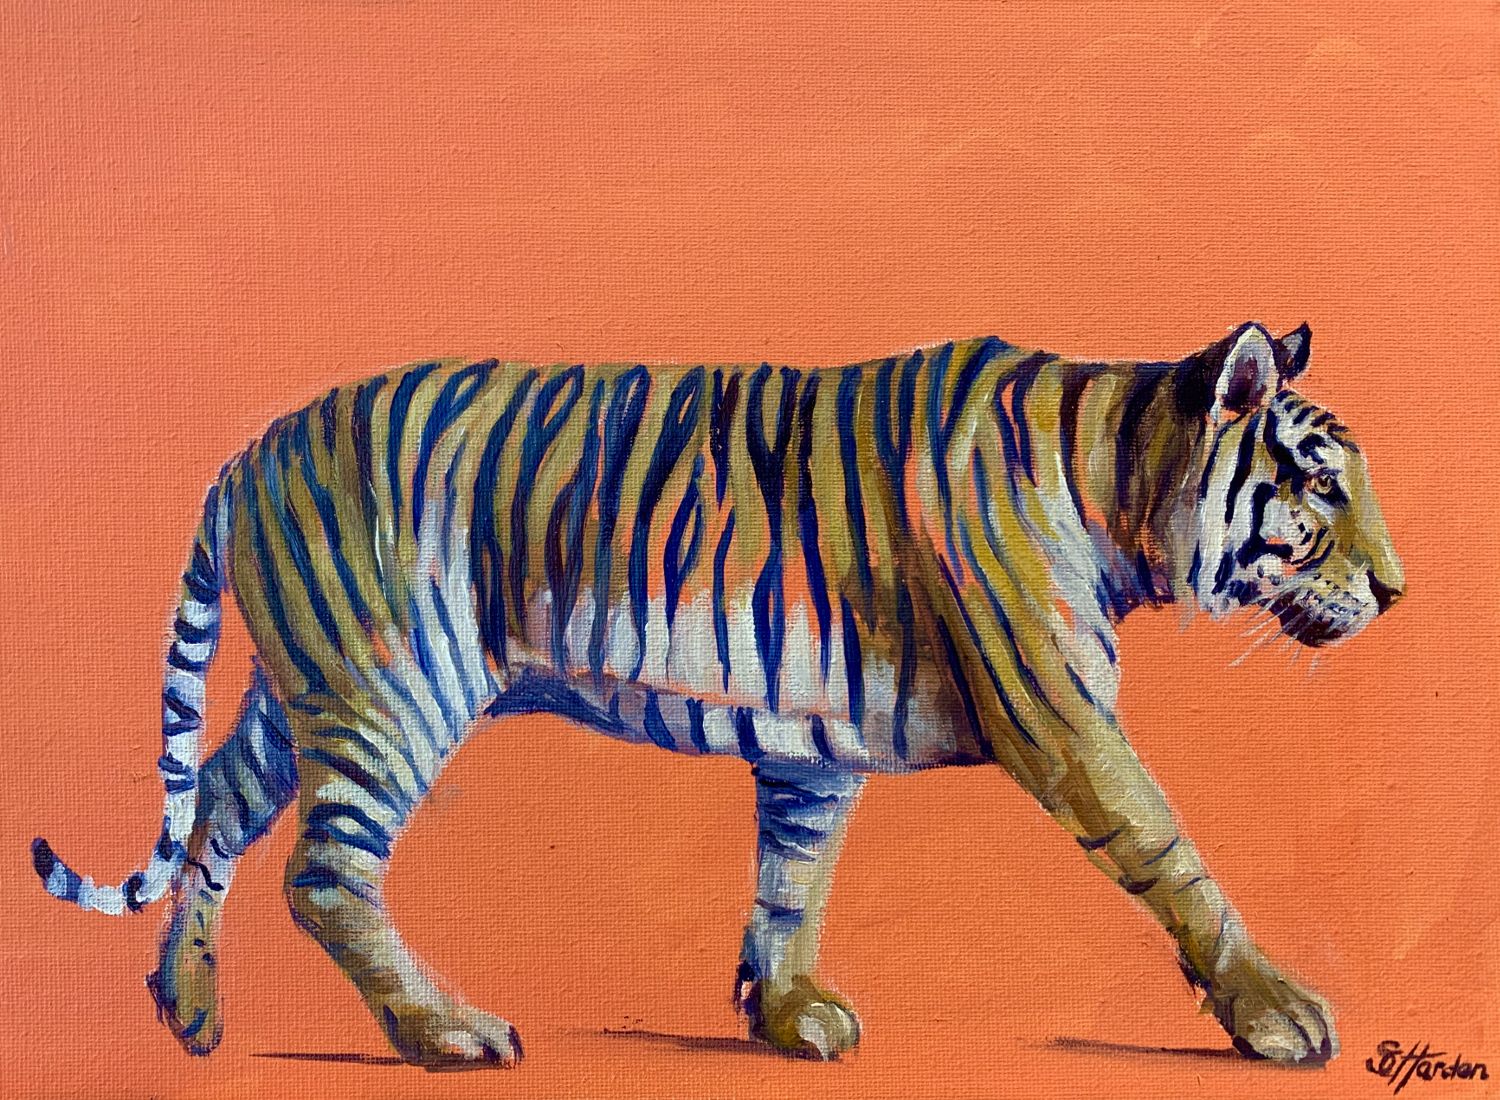 Tiger Tiger Burning Bright by Sophie Harden